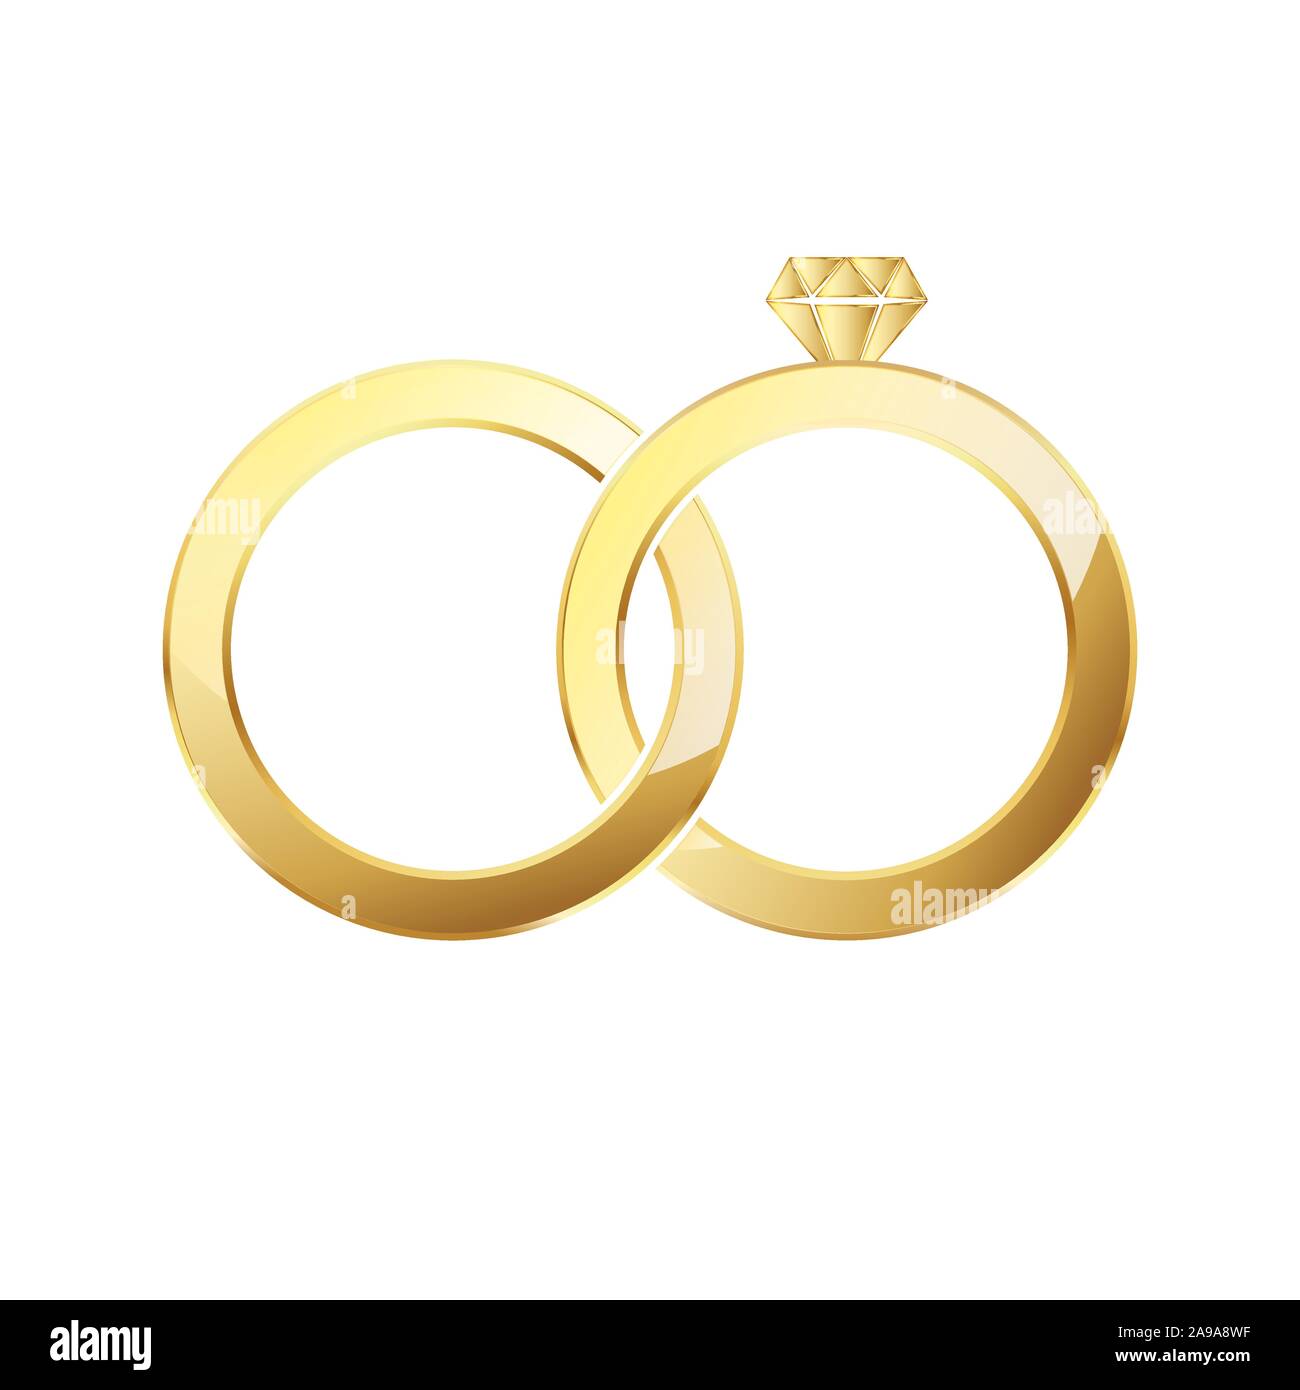 Wedding Ring Icon Wedding Vector Ring Illustration Stock Illustration -  Download Image Now - iStock